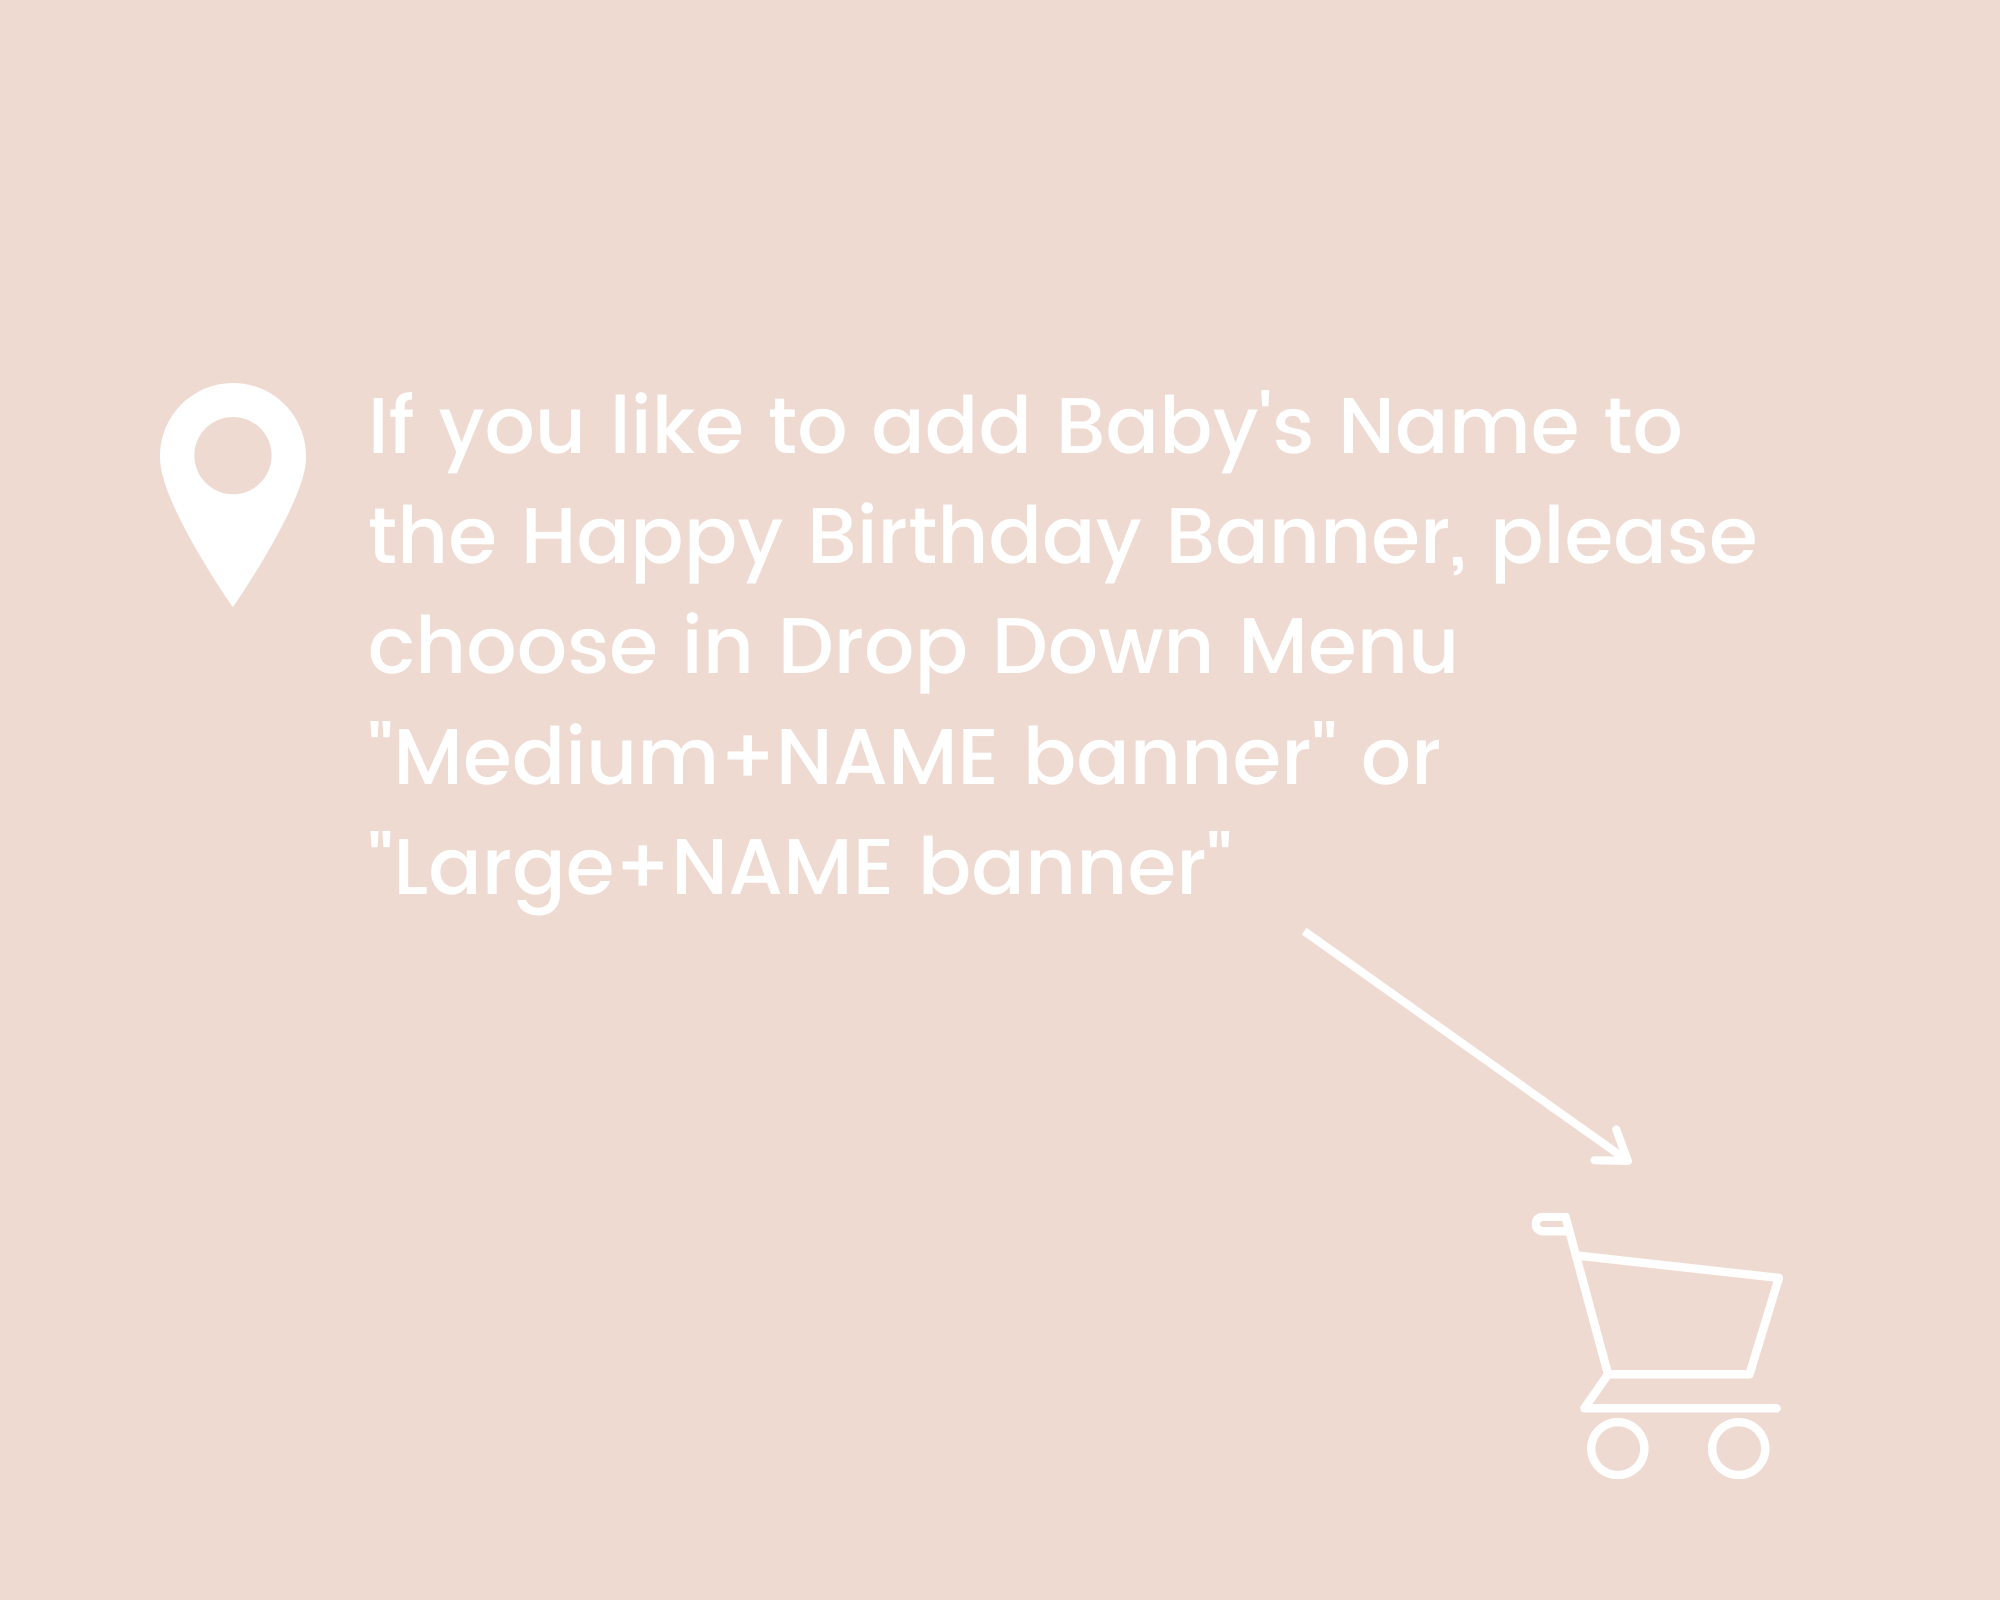 Daisy Birthday Party Bundle